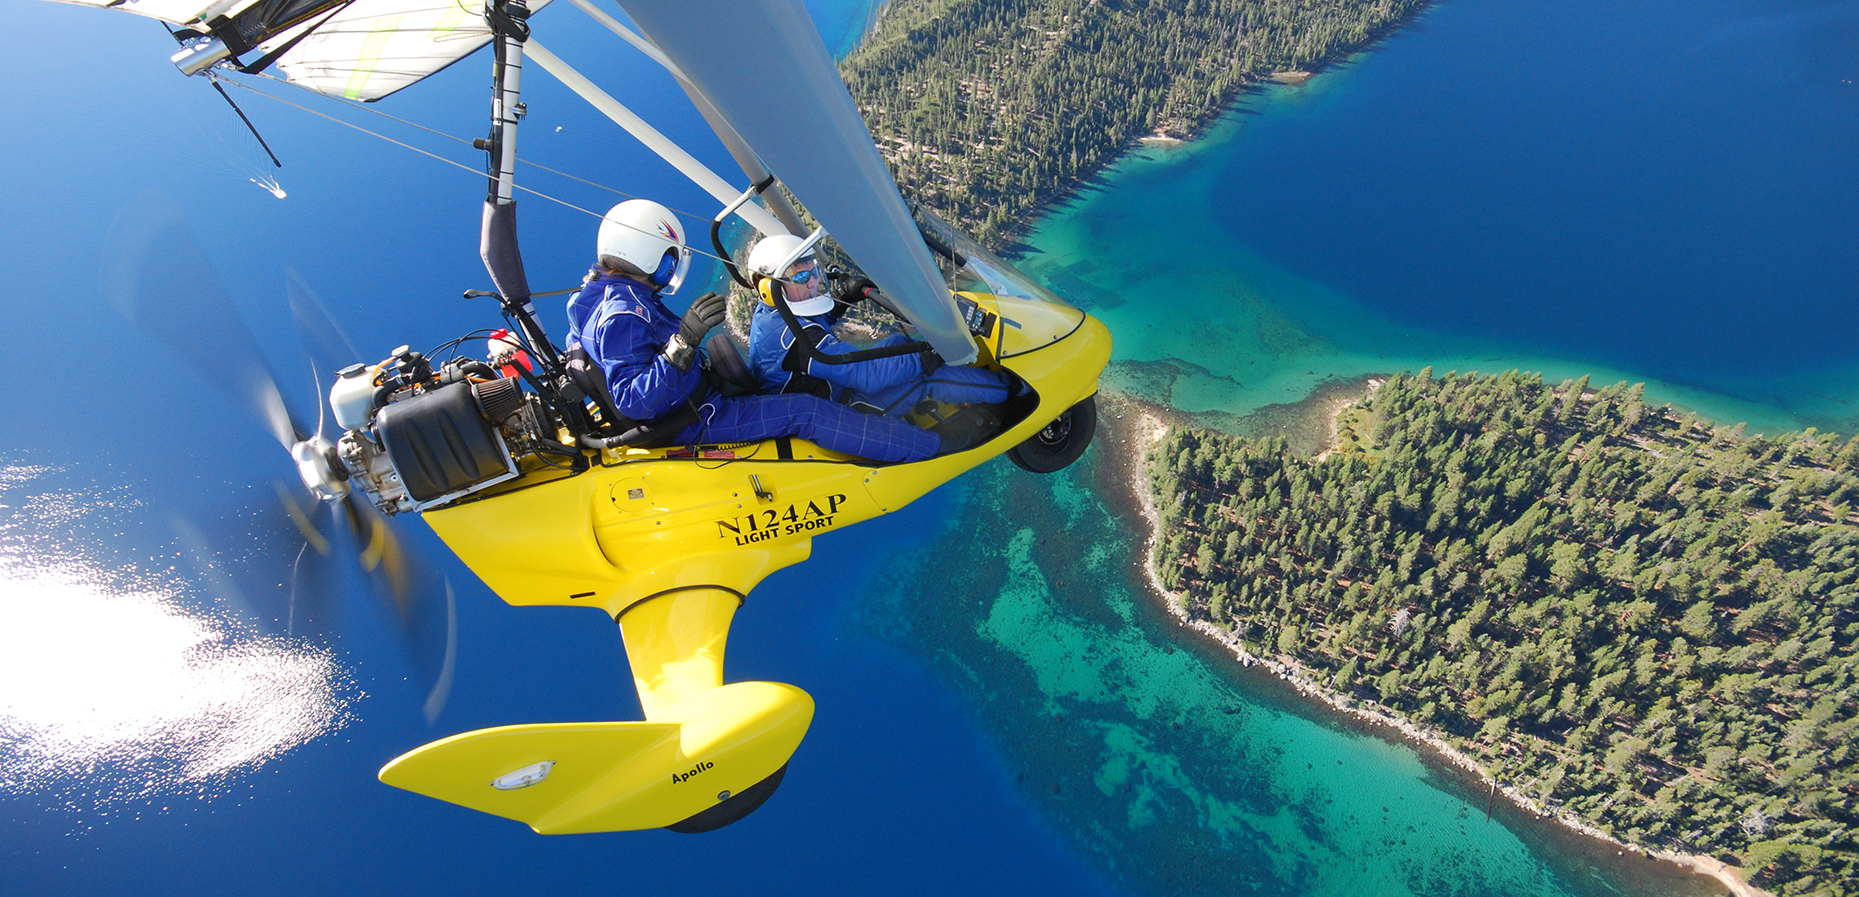 Powered Hang Gliding above Emerald Bay.